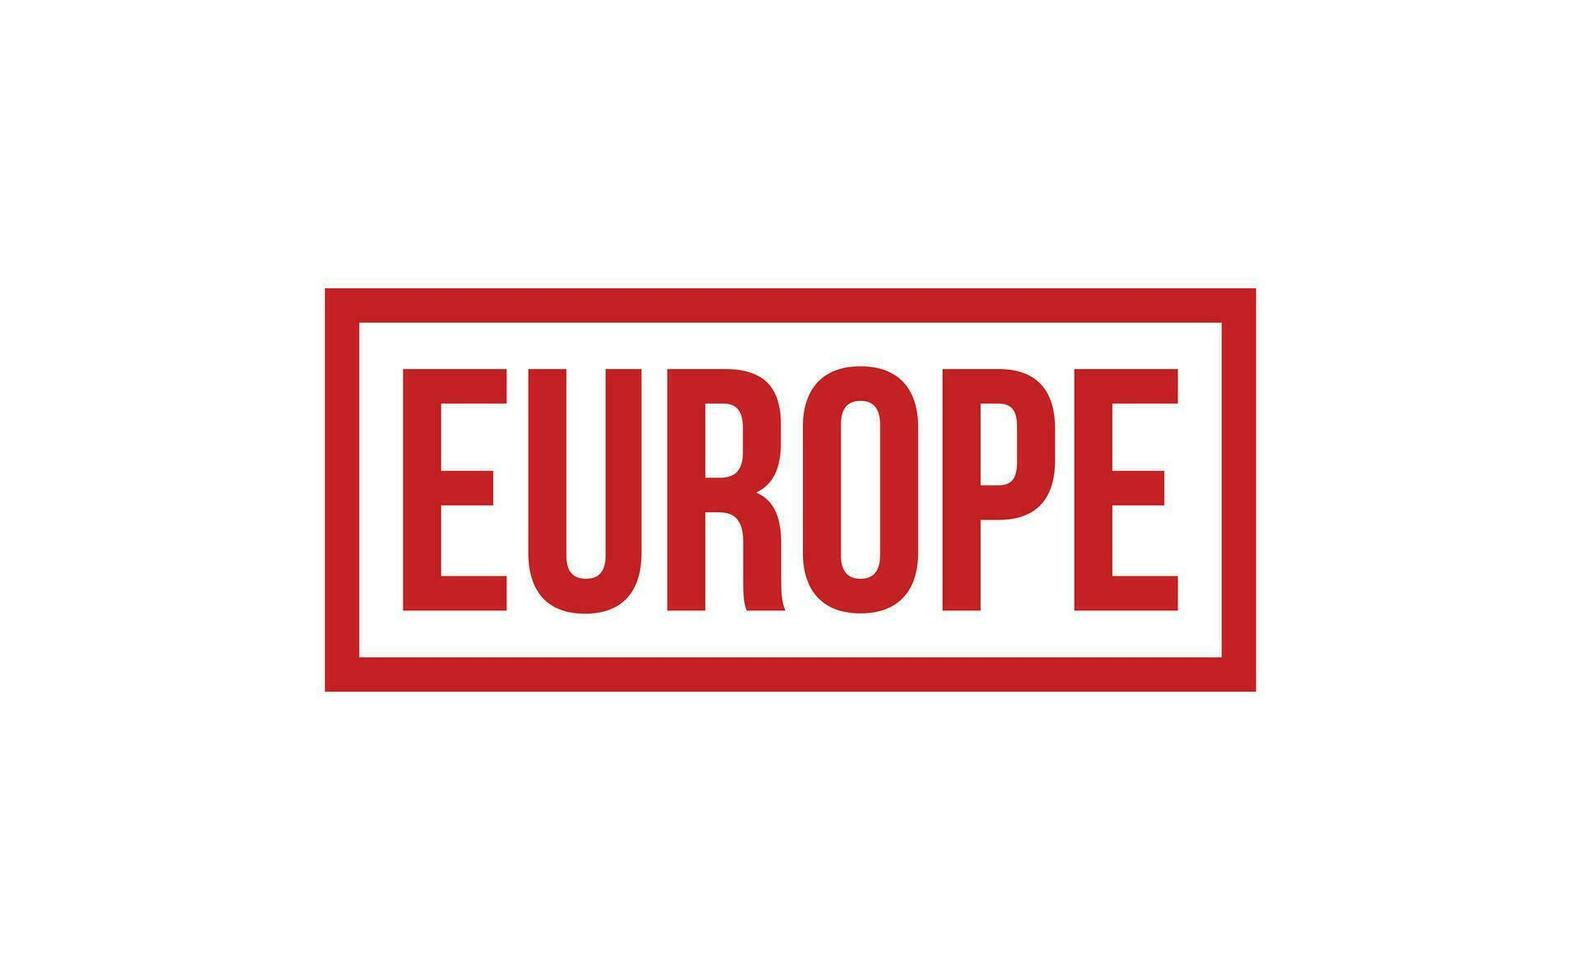 Europa caucho sello sello vector